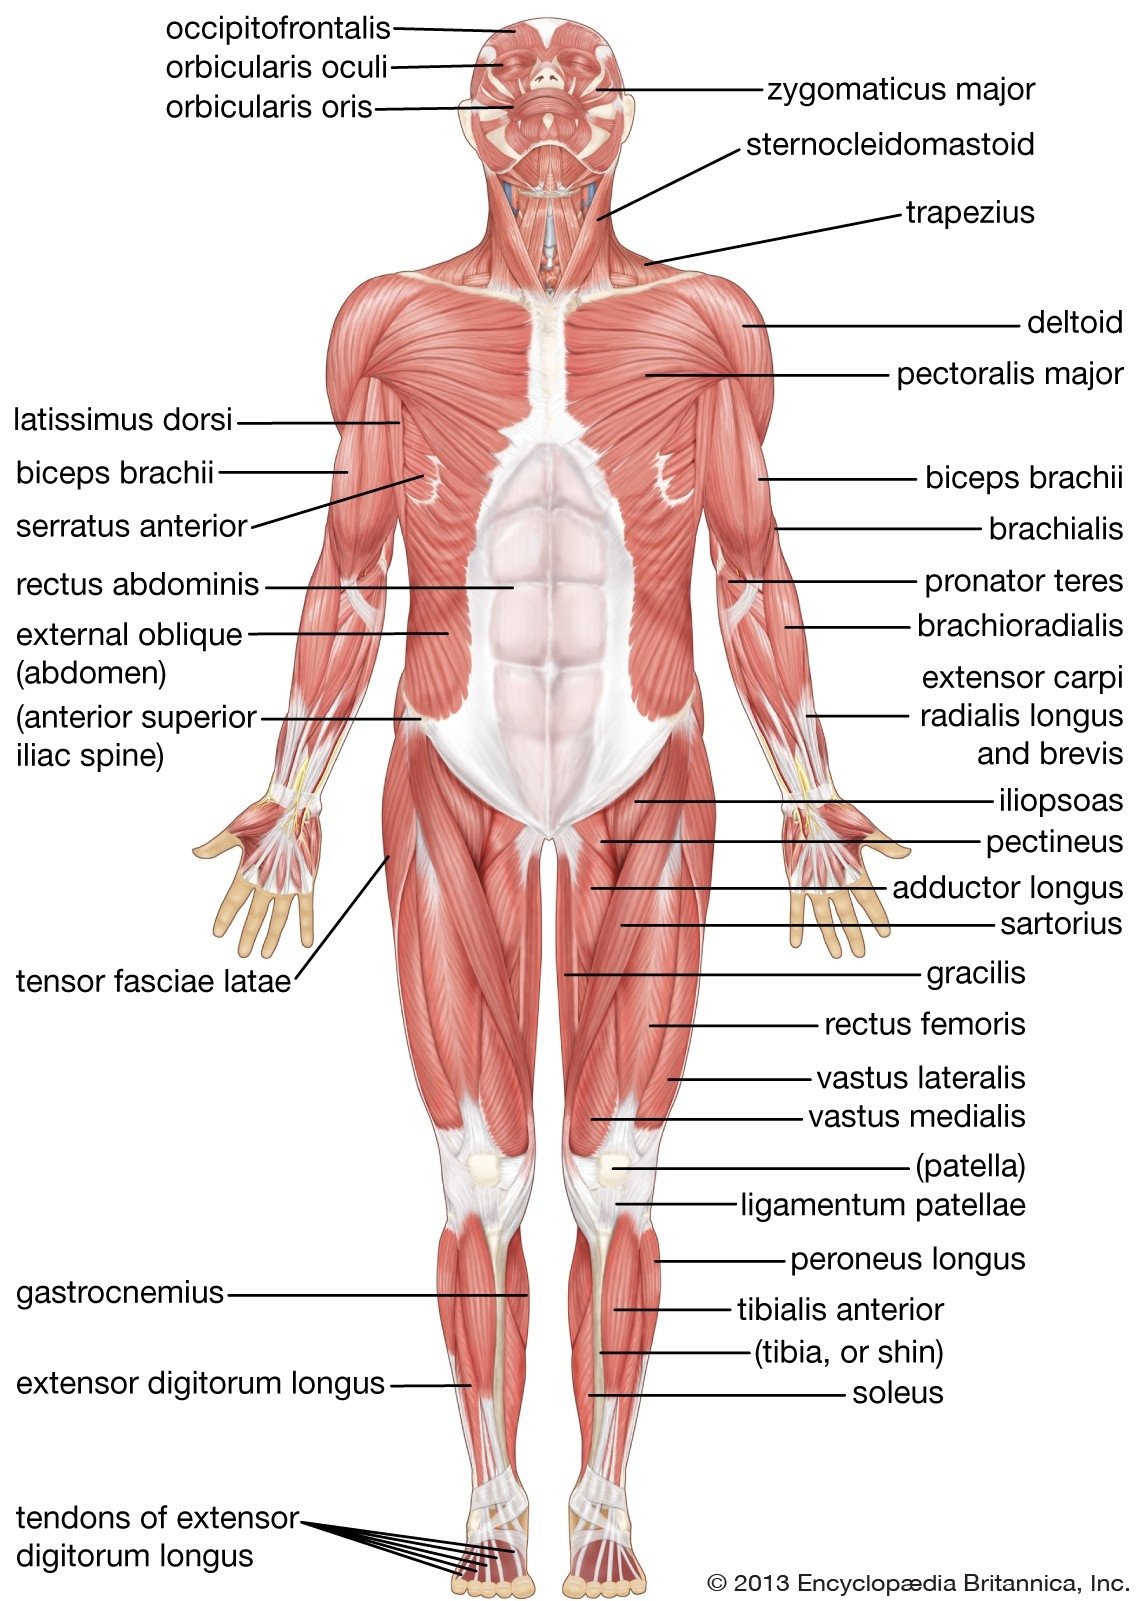 Nerve Supply /Innervation of Quadratus Lumborum Muscle